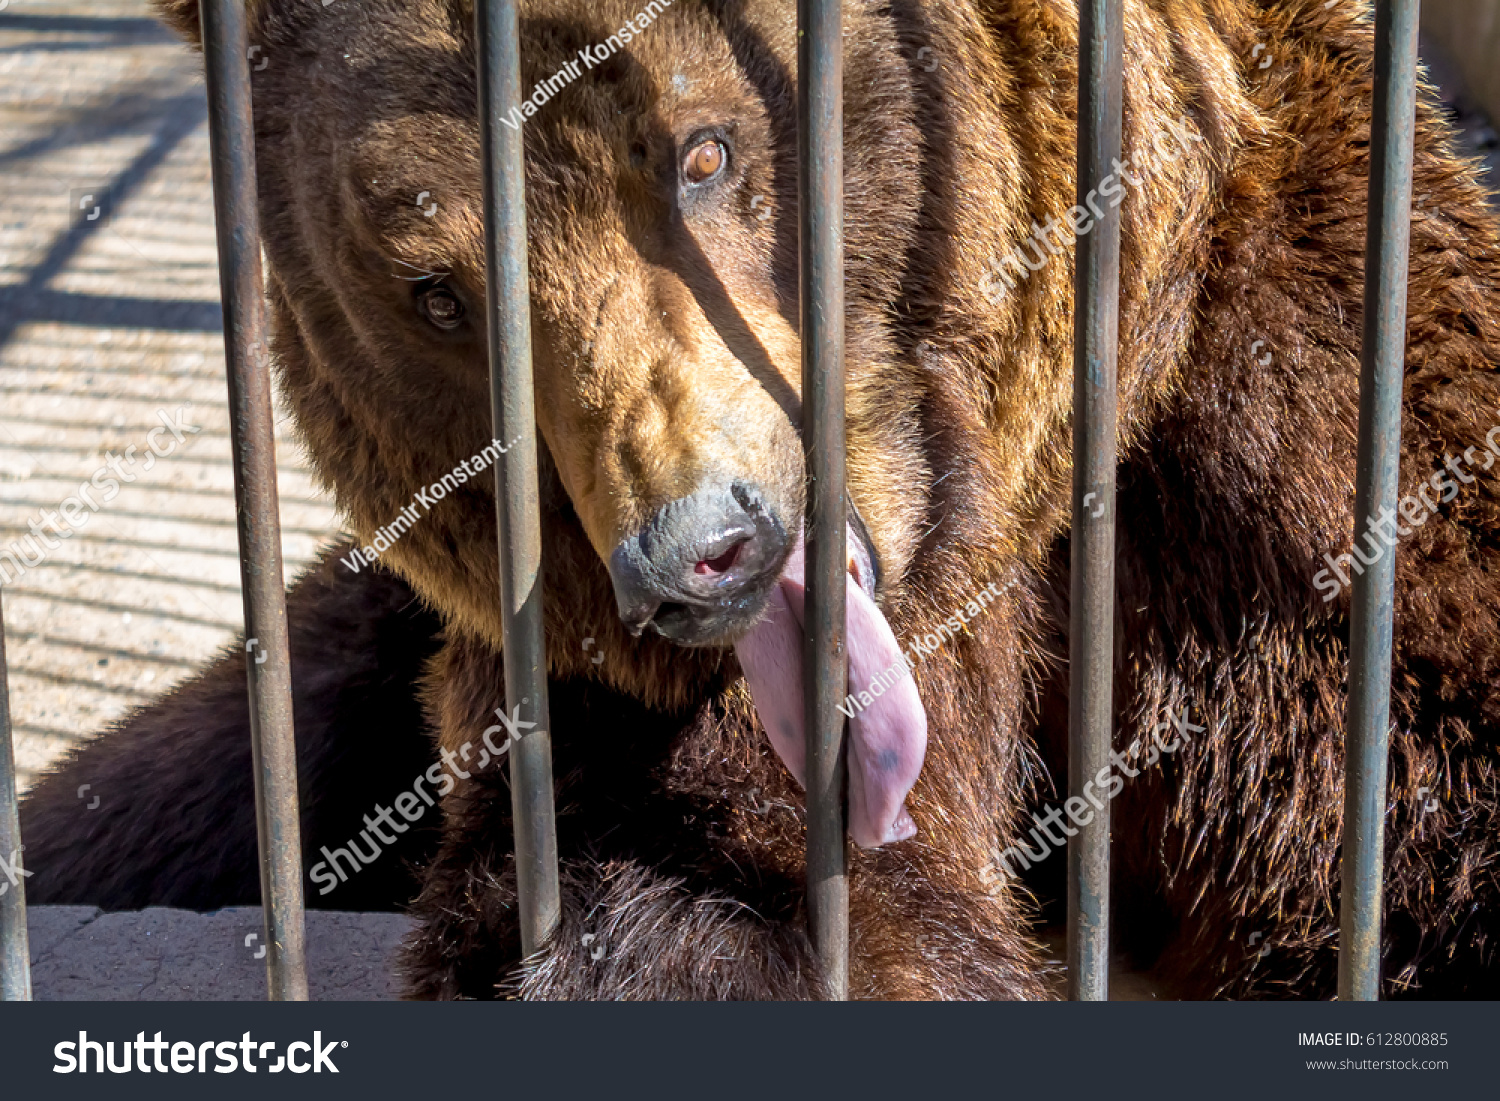 Bear in the zoo behind bars #612800885